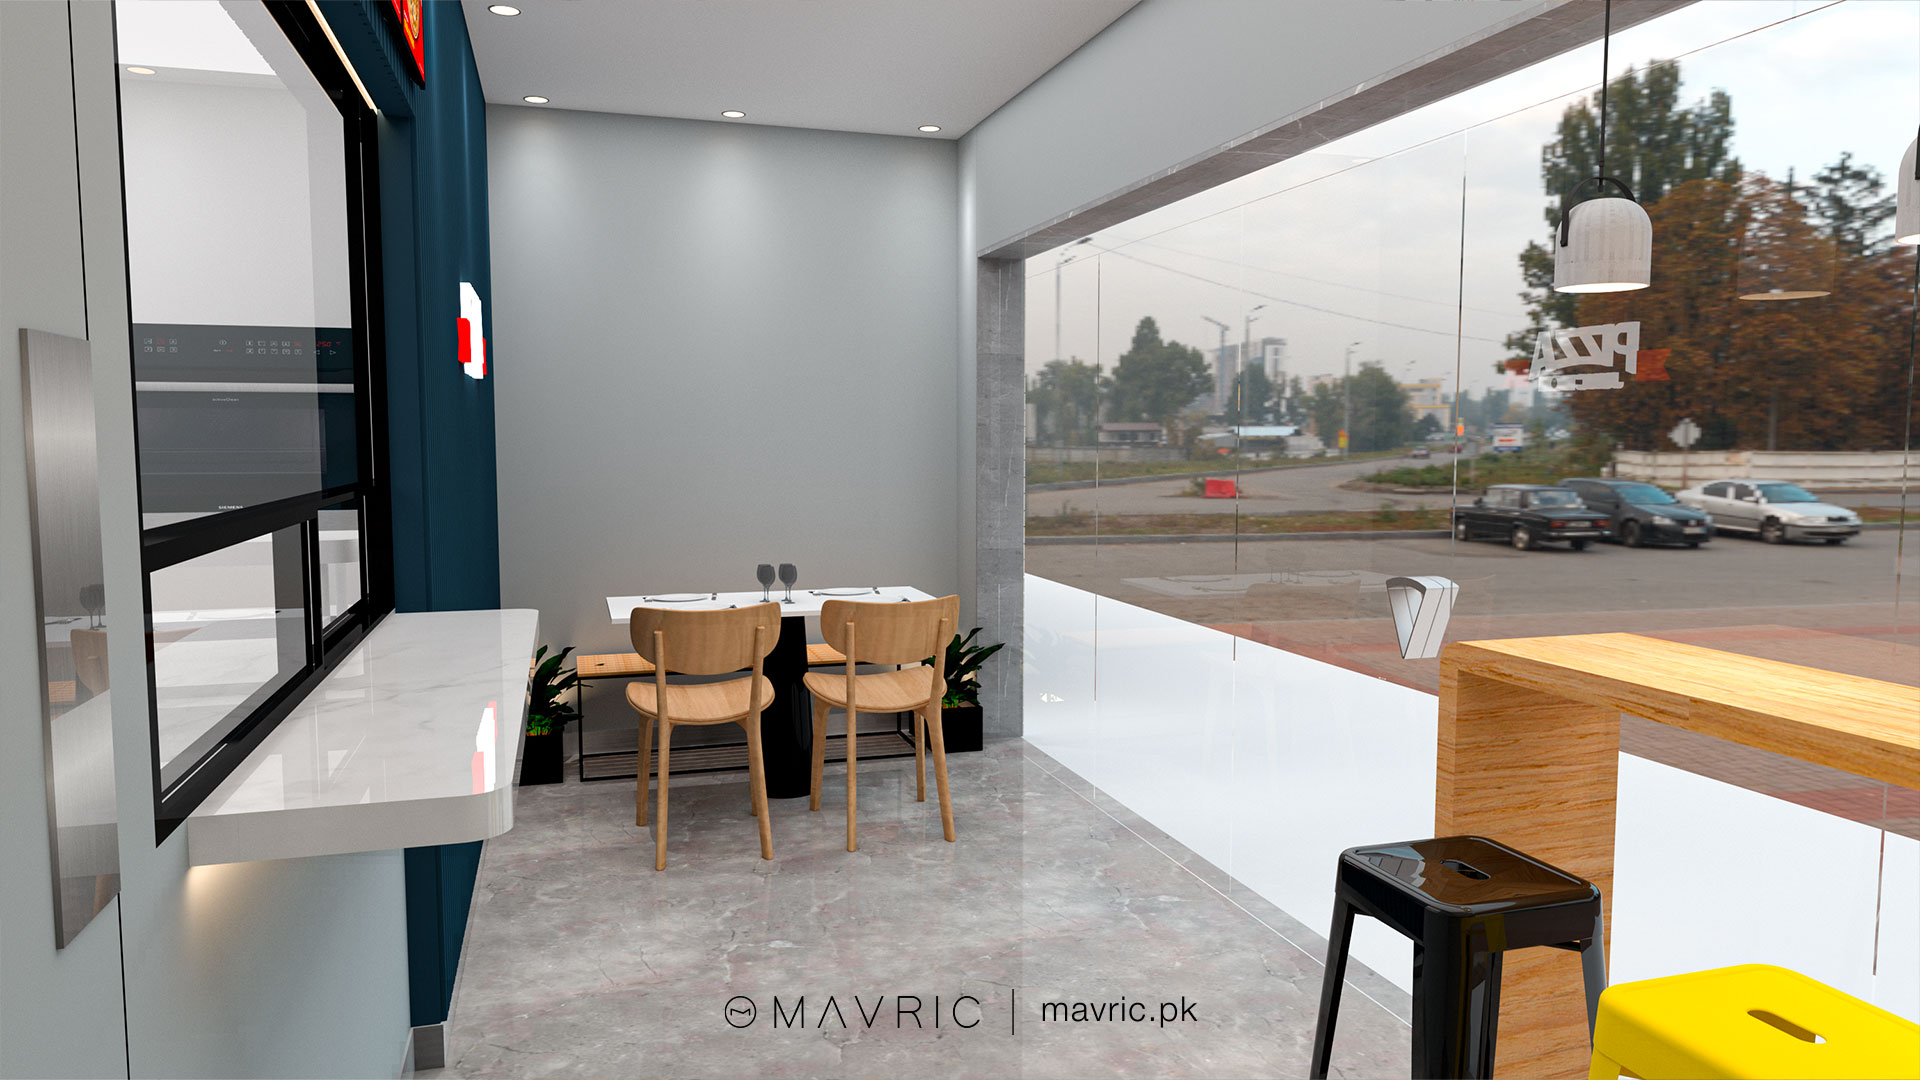 Architectural-interior-design-retail-commercial-design-lahore-pizza-junction-02